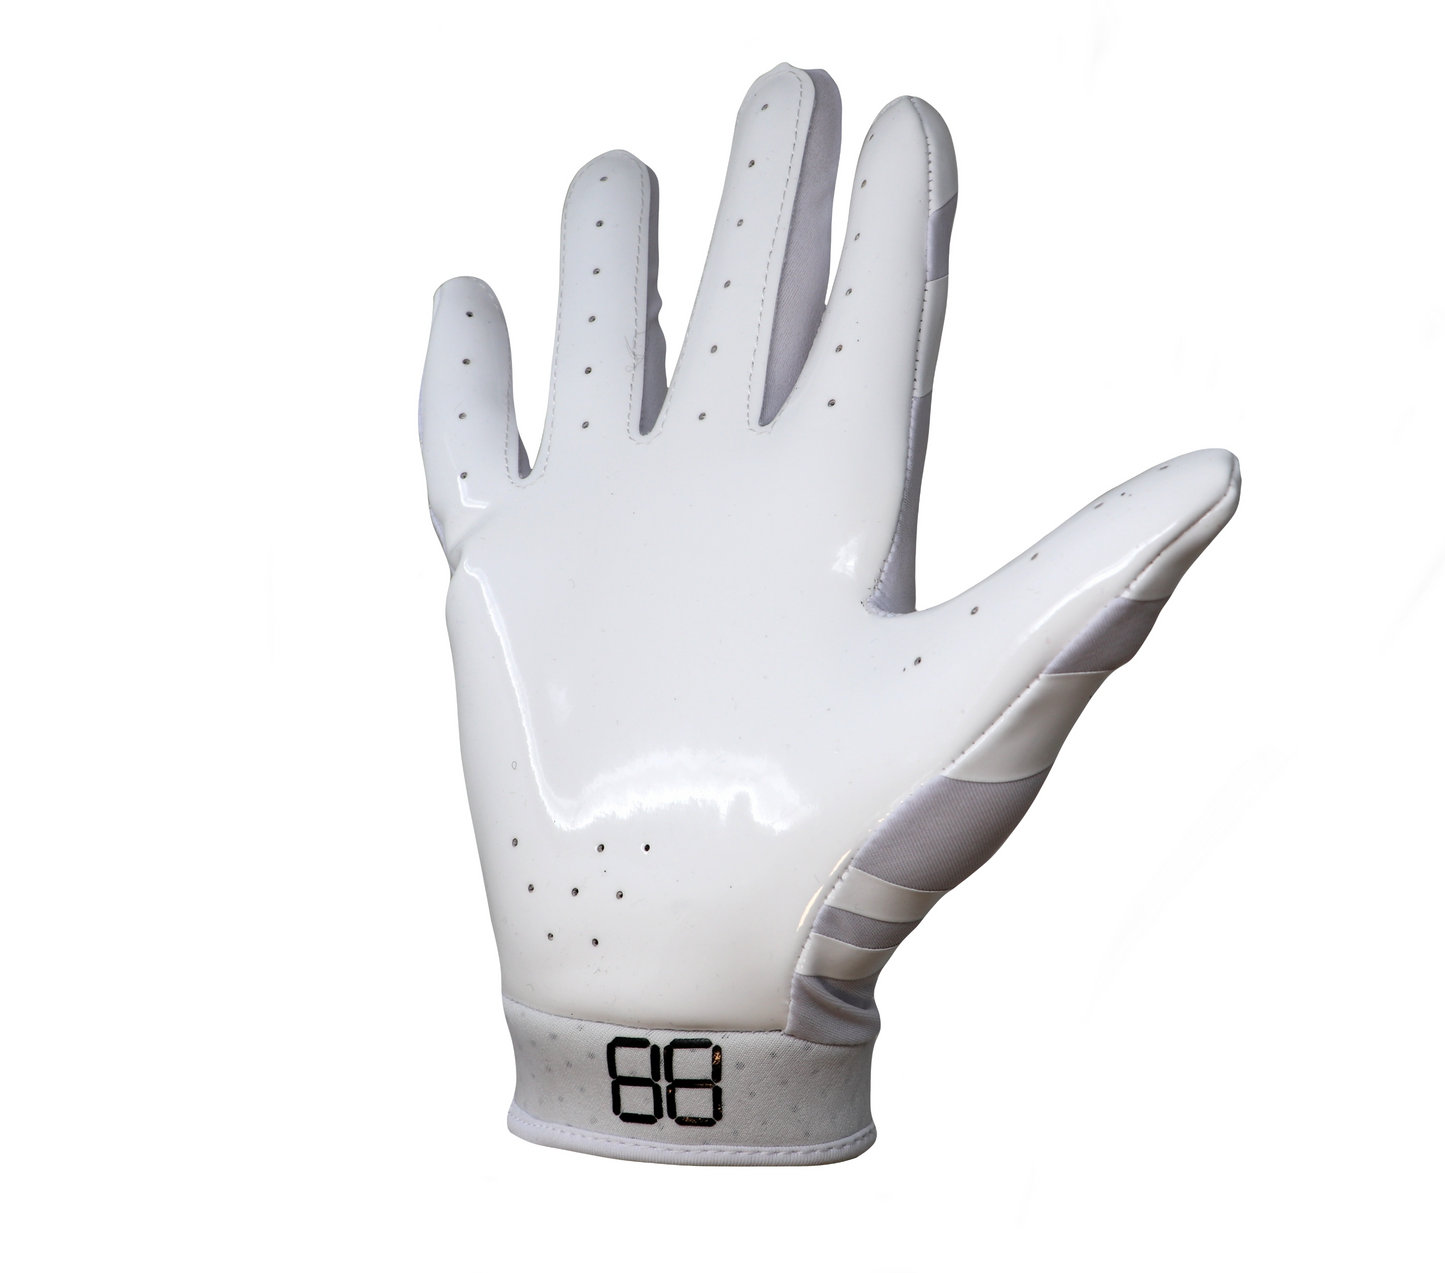 FRG-03 gants de football américain de pro receveur, RE,DB,RB, Blanc